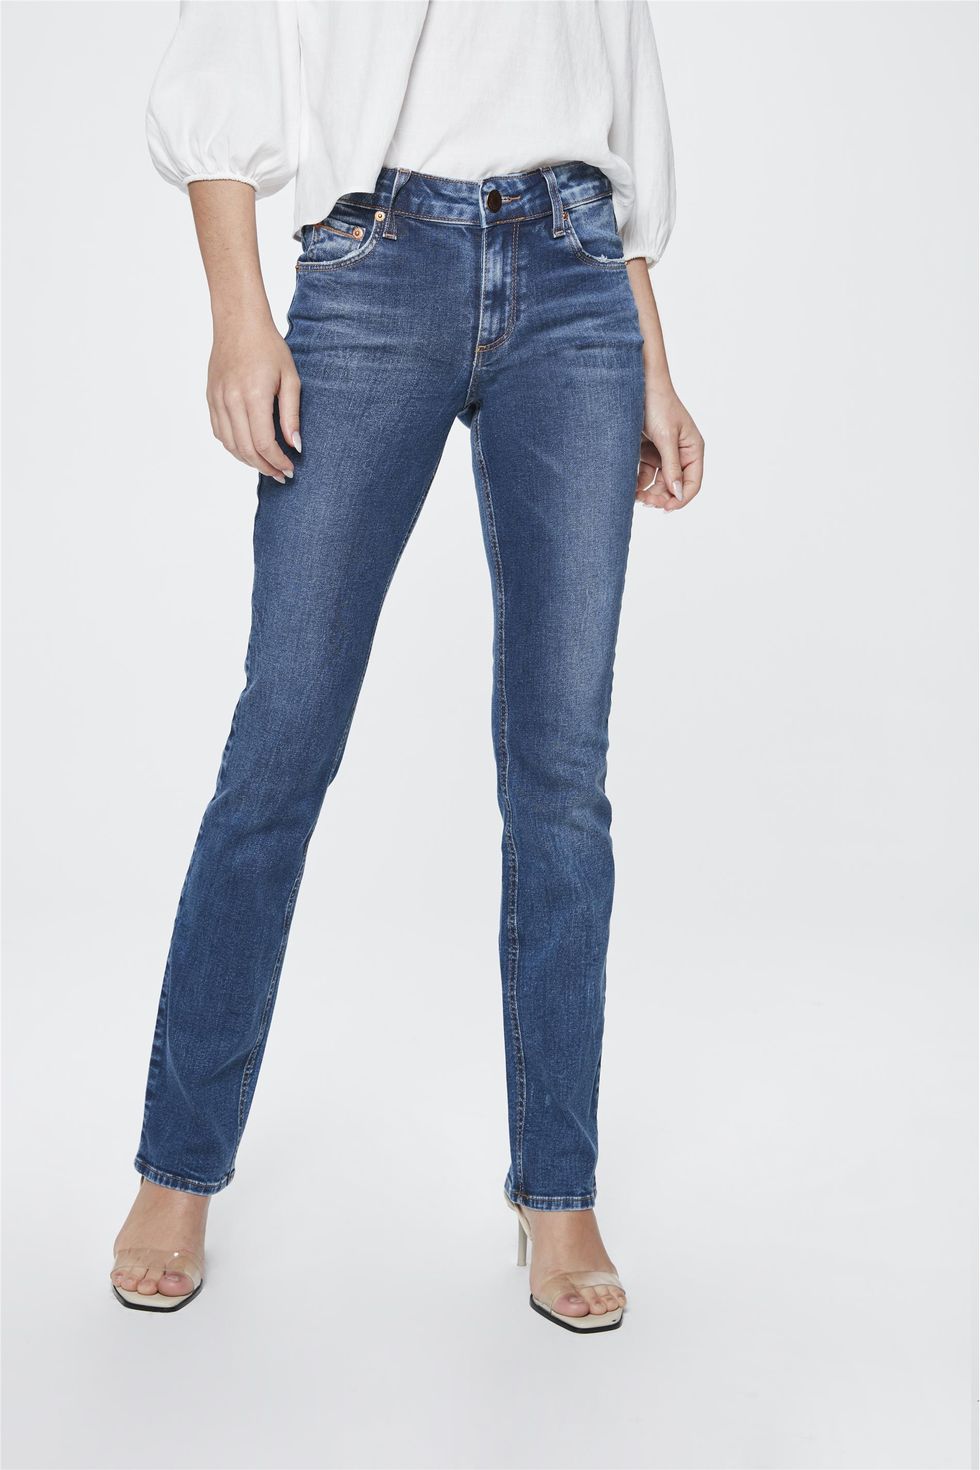 calça jeans reta cintura alta